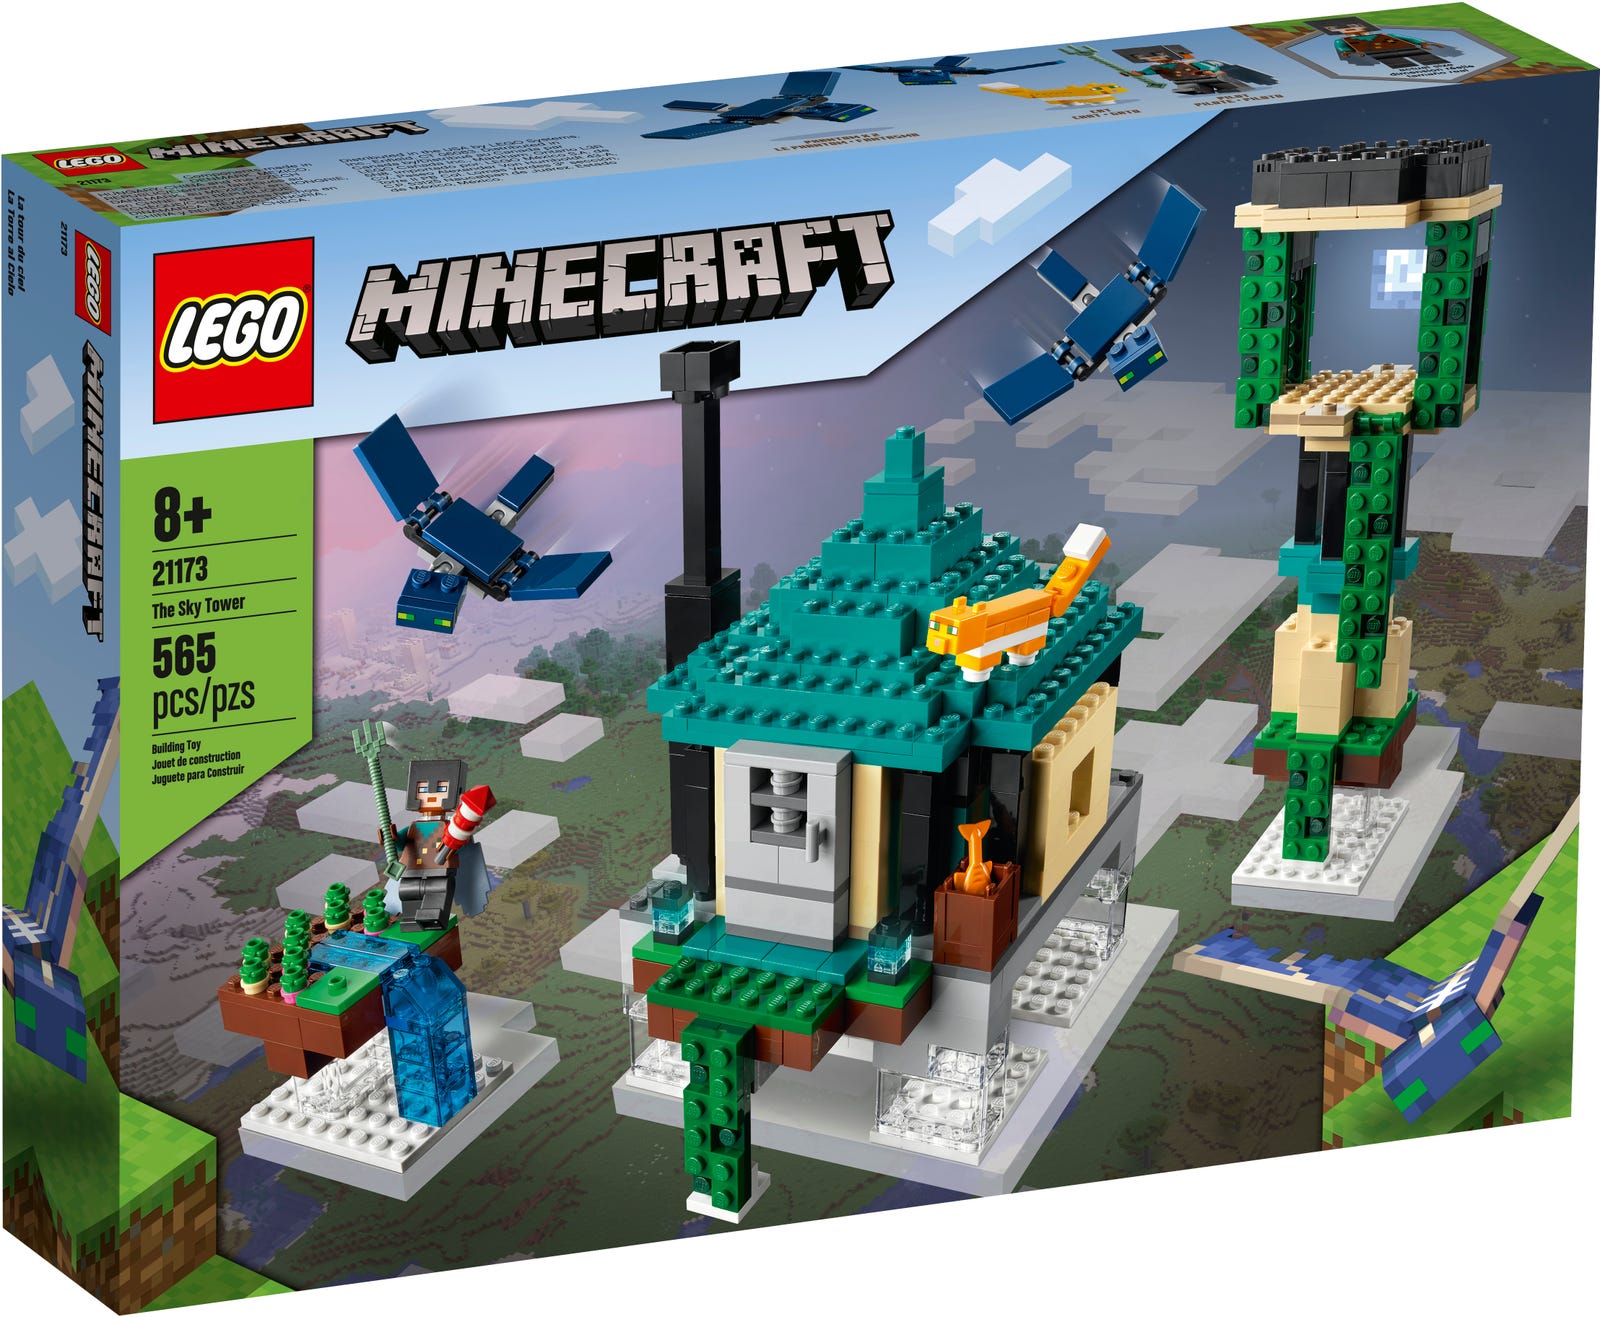 LEGO Minecraft - The Sky Tower (21173)